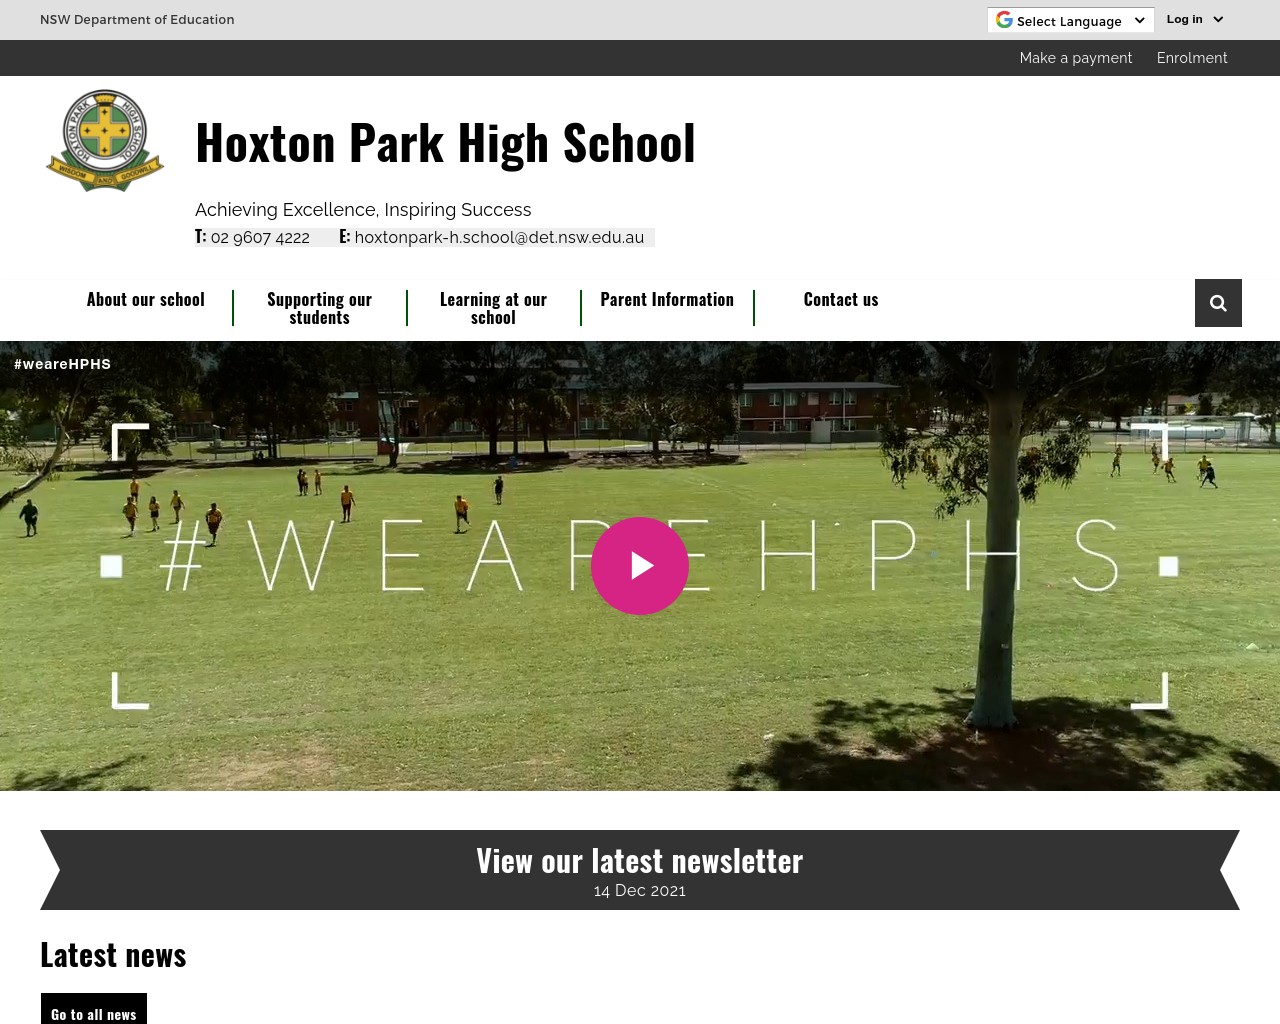 Hoxton Park High School